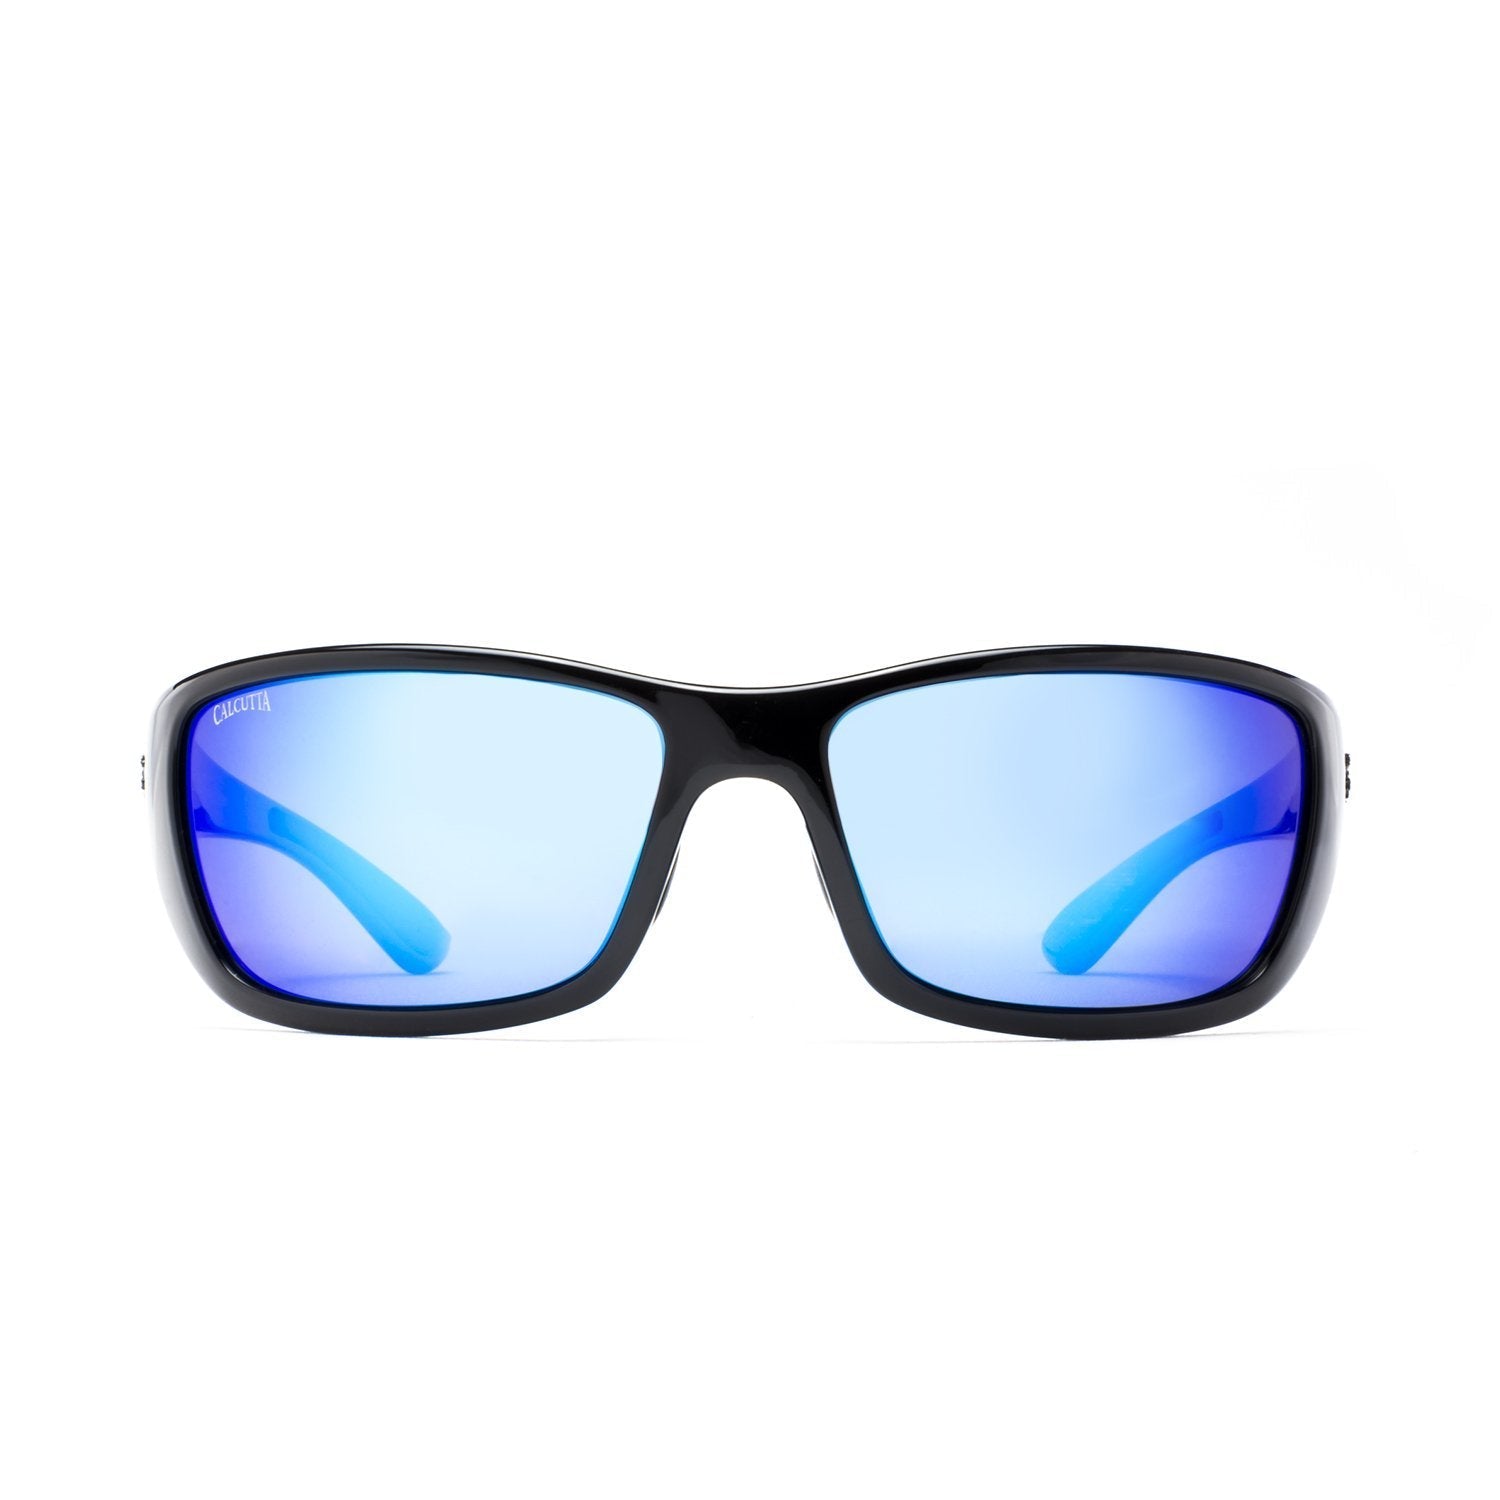 Calcutta Boca Polarized Sunglasses Black Frame/Green Mirror Lens